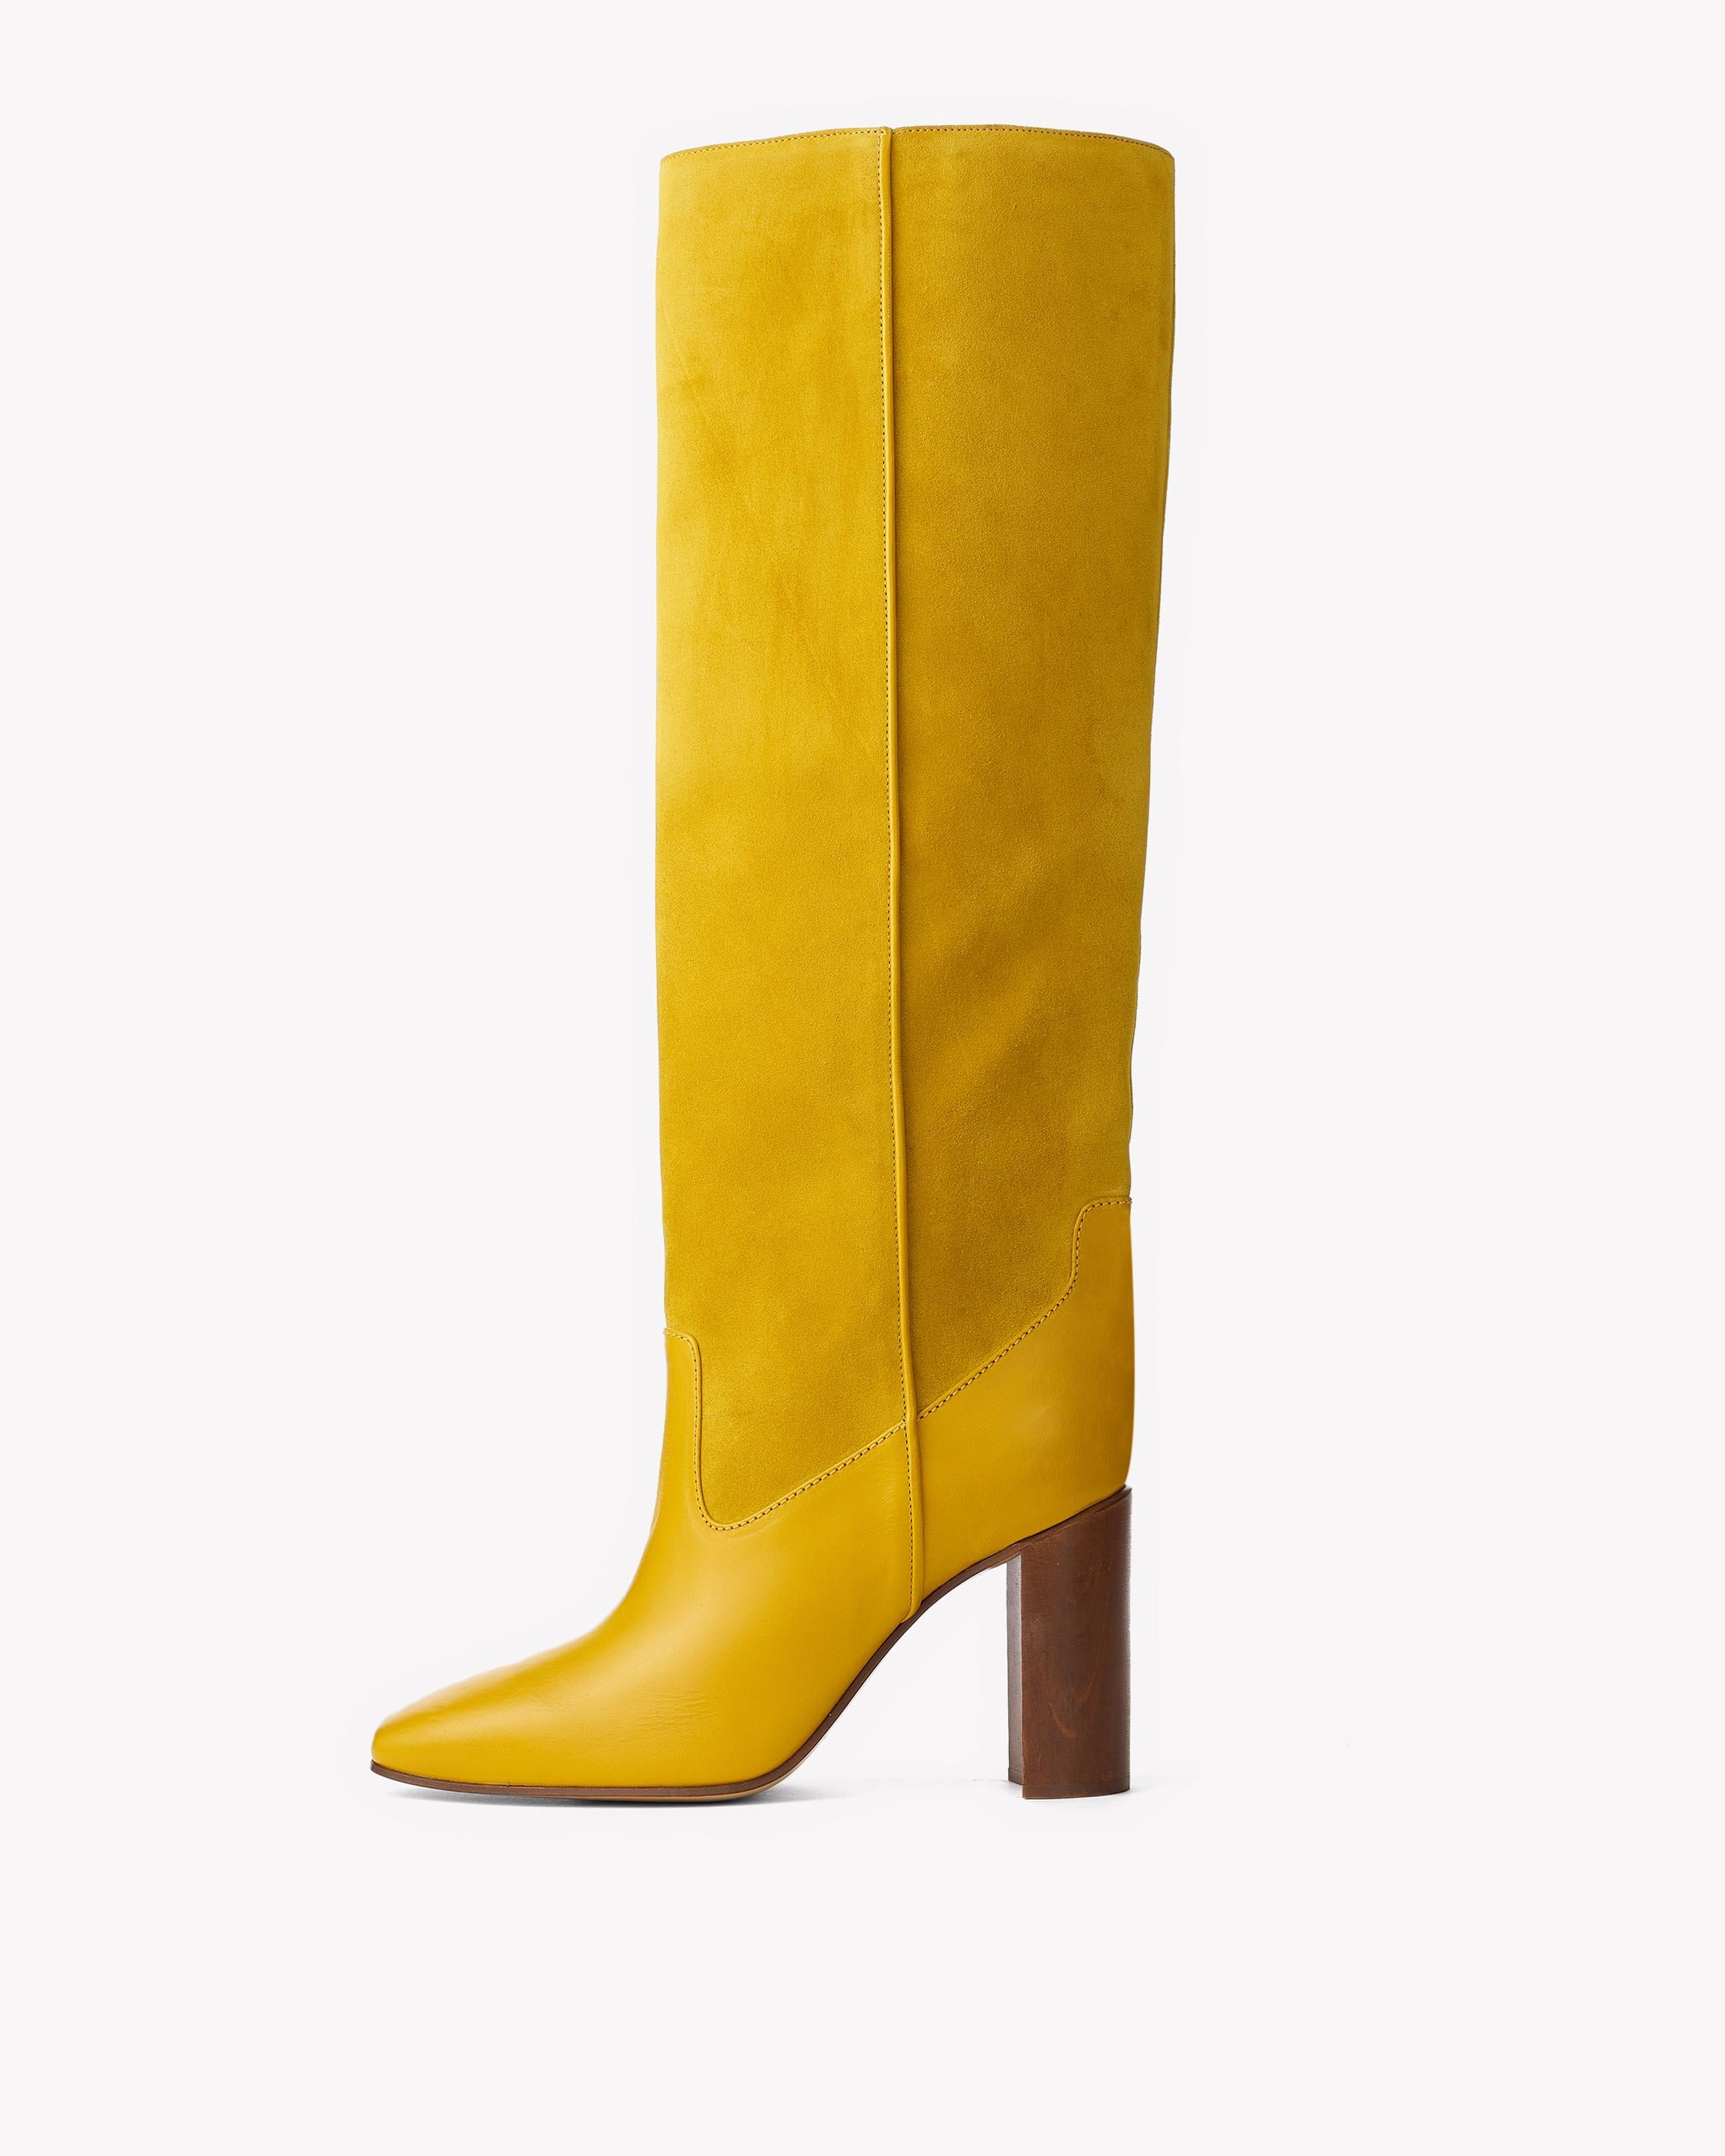 Emily Ratajkowski's Fall Knee High Boots Are Mustard Yellow